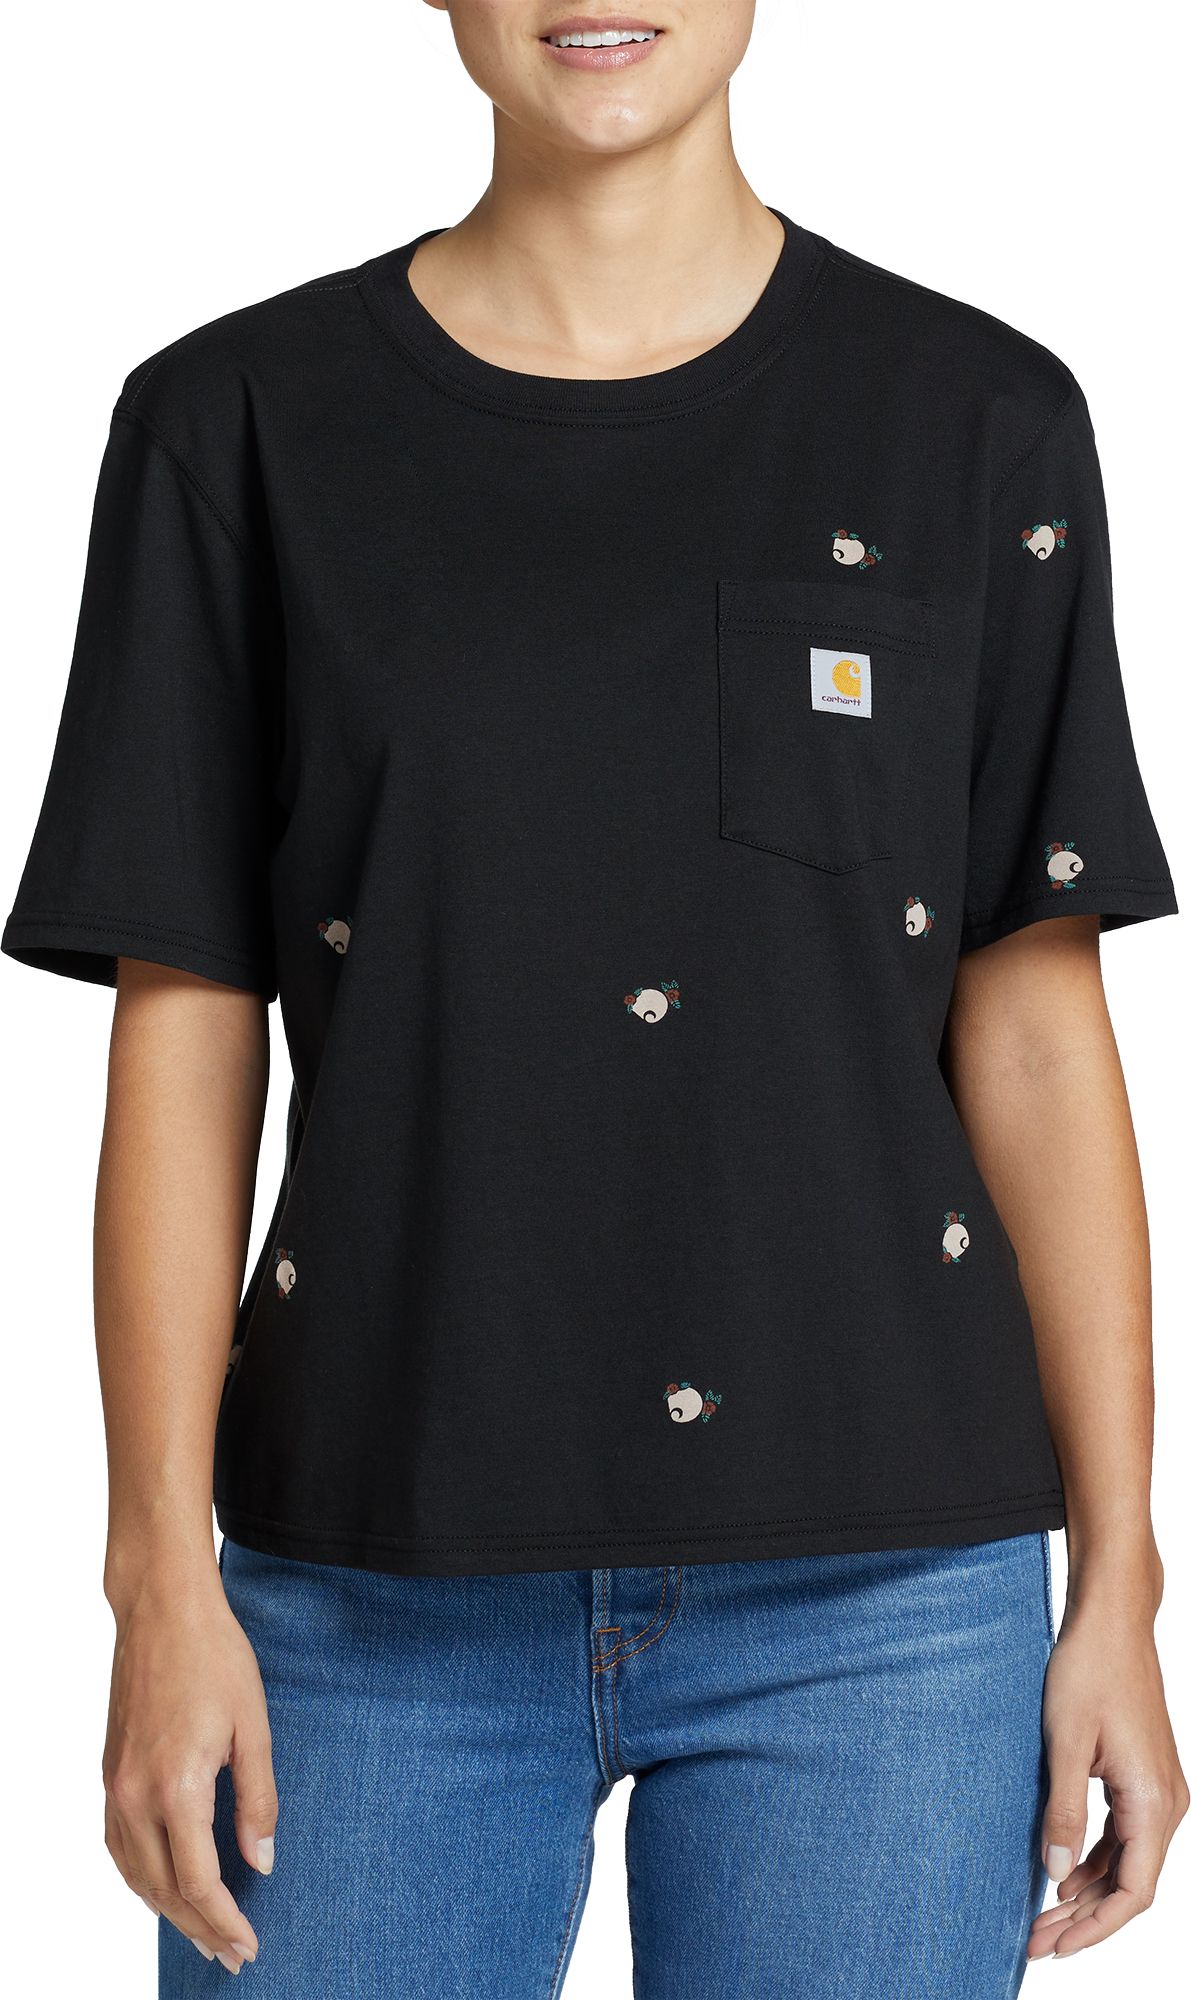 Carhartt Women's Boxy Fit Allover Print Short Sleeve T-Shirt